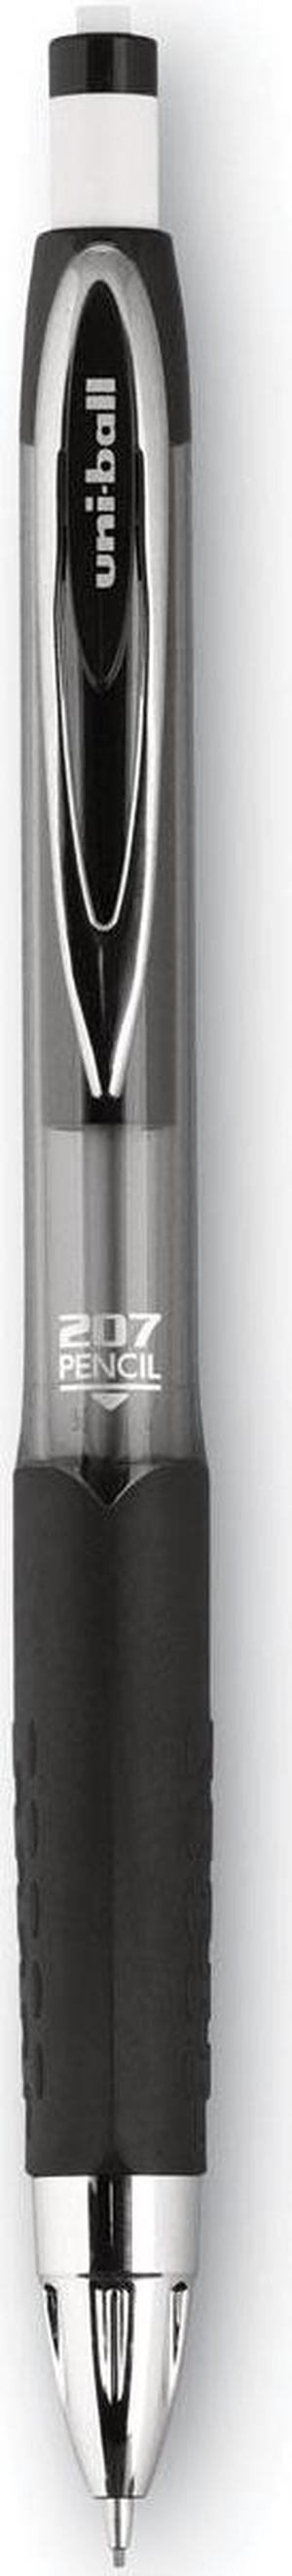 Uni-ball 207 Mechanical Pencil, 0.7 mm, HB (#2), Black Lead, Black Barrel, Dozen